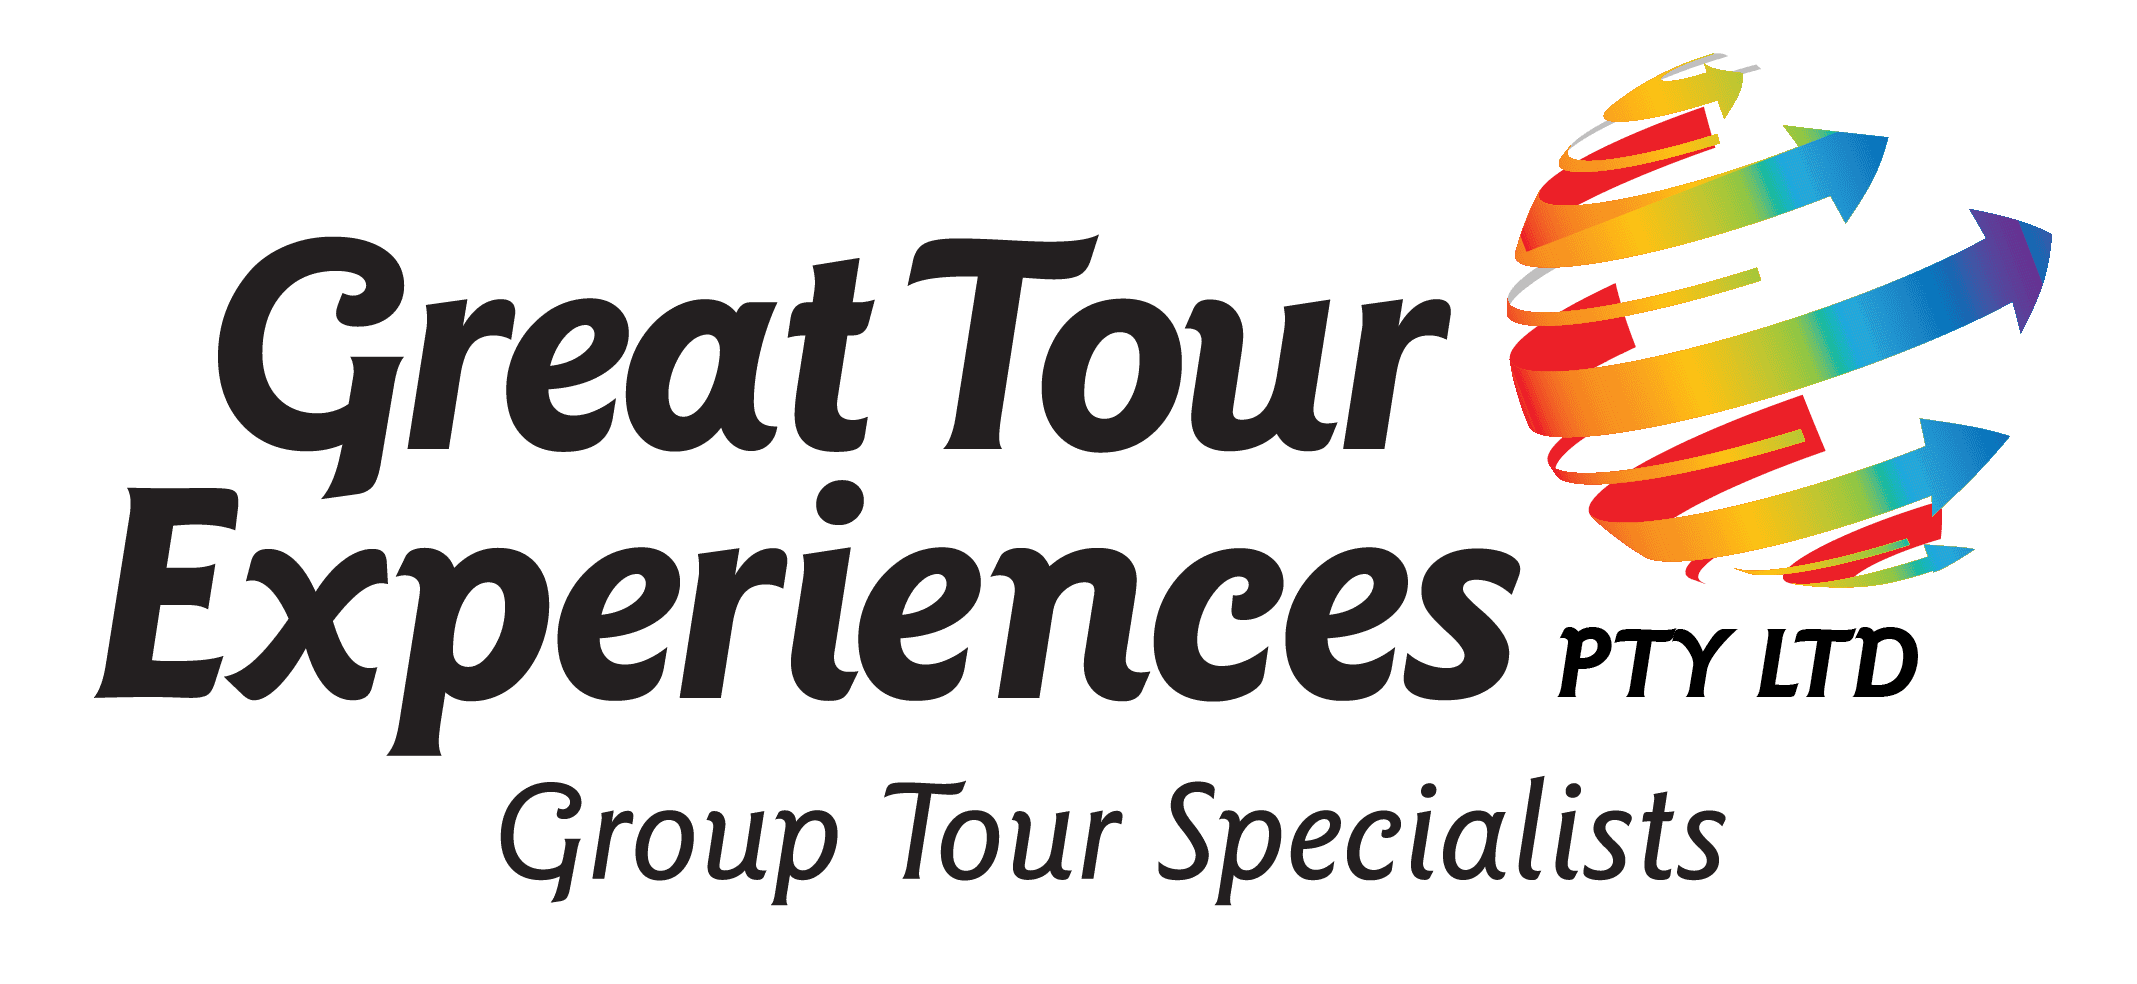 great tour experiences